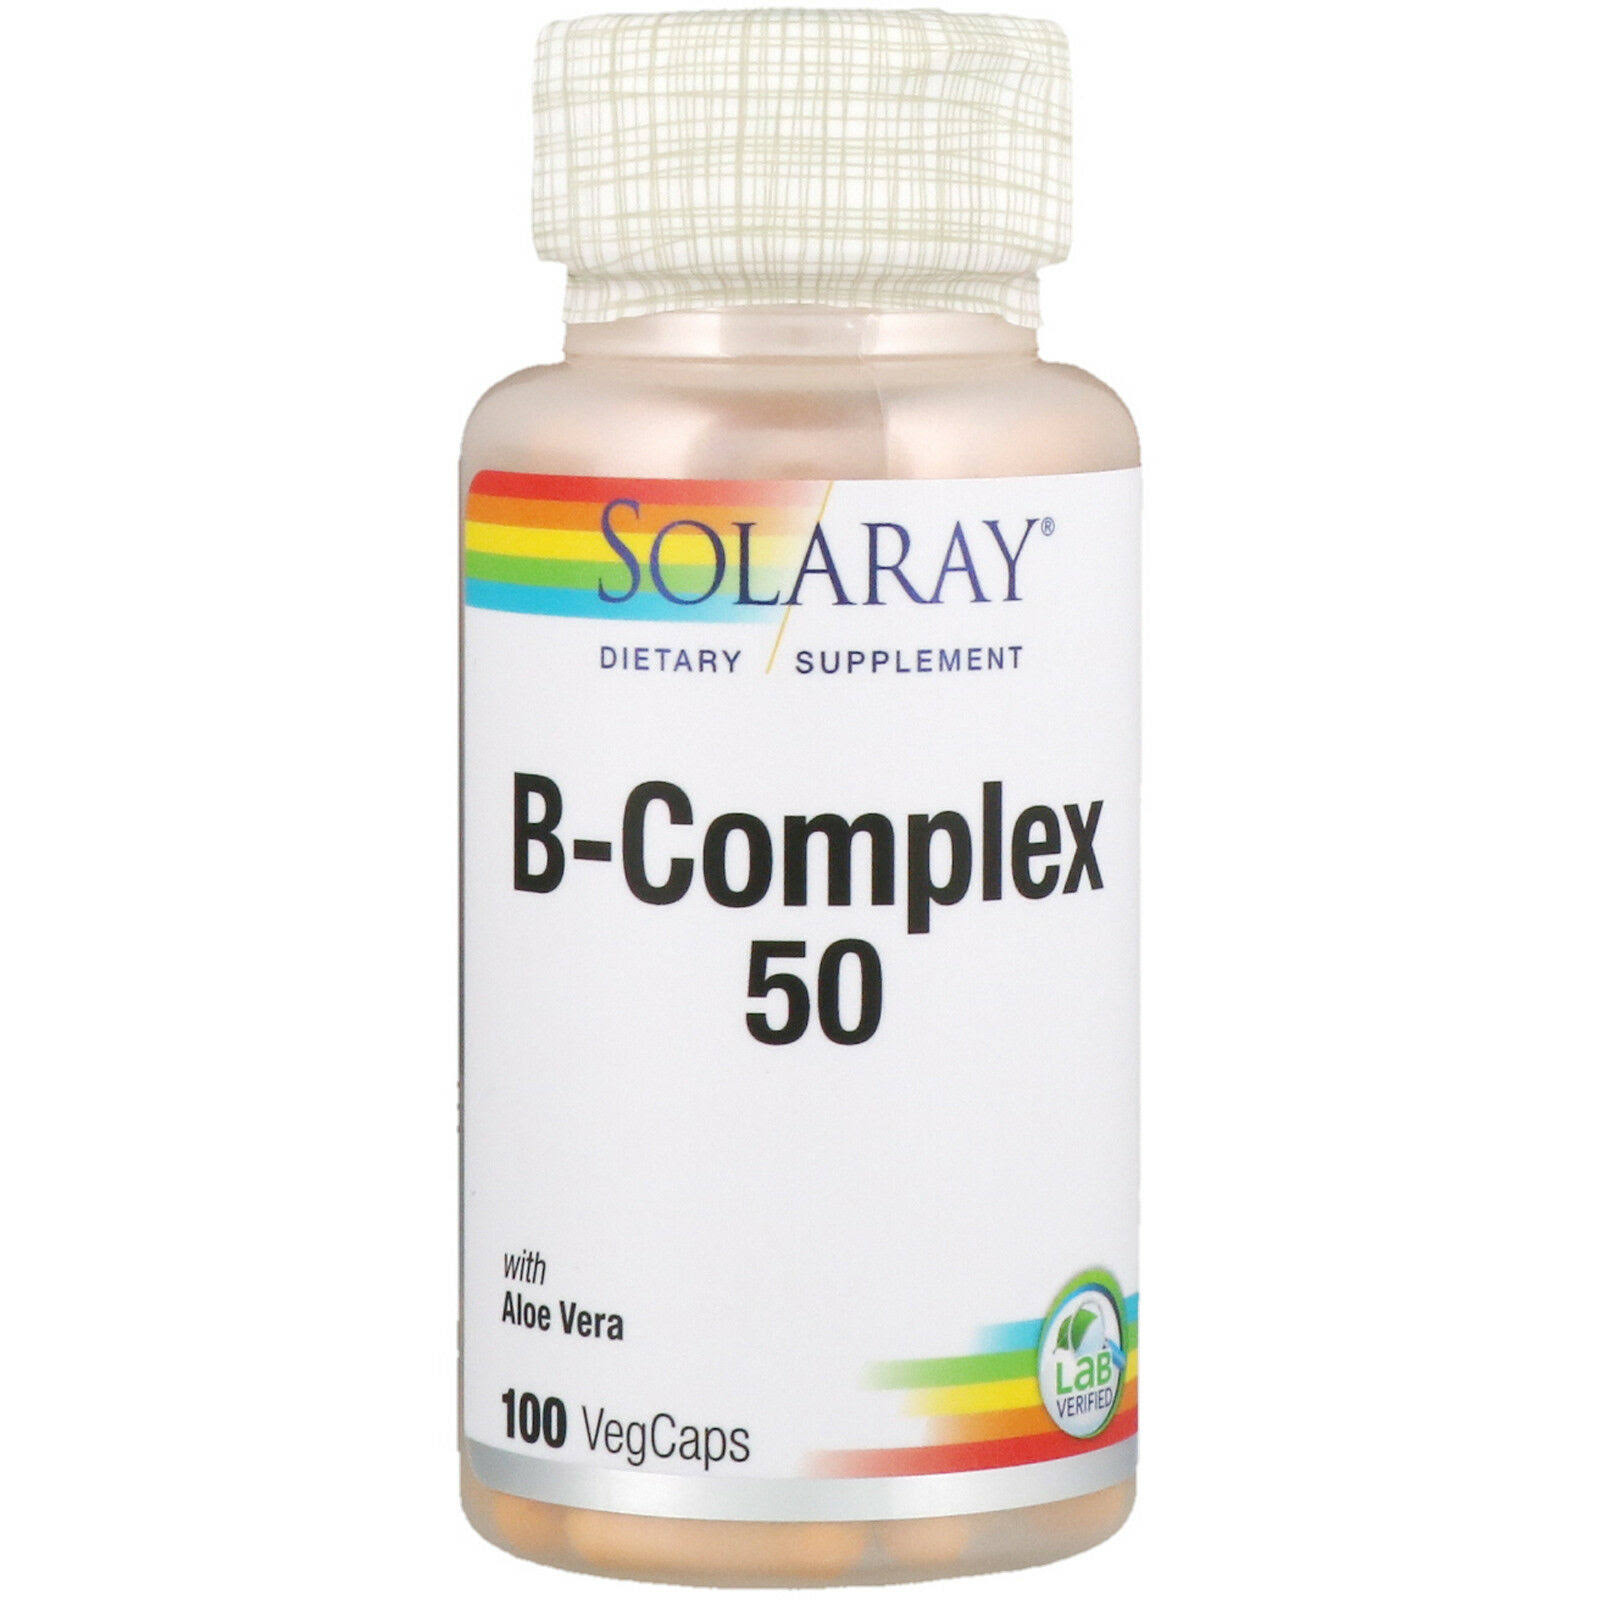 Solaray B-Complex Supplement - 50mg, 100 Capsules